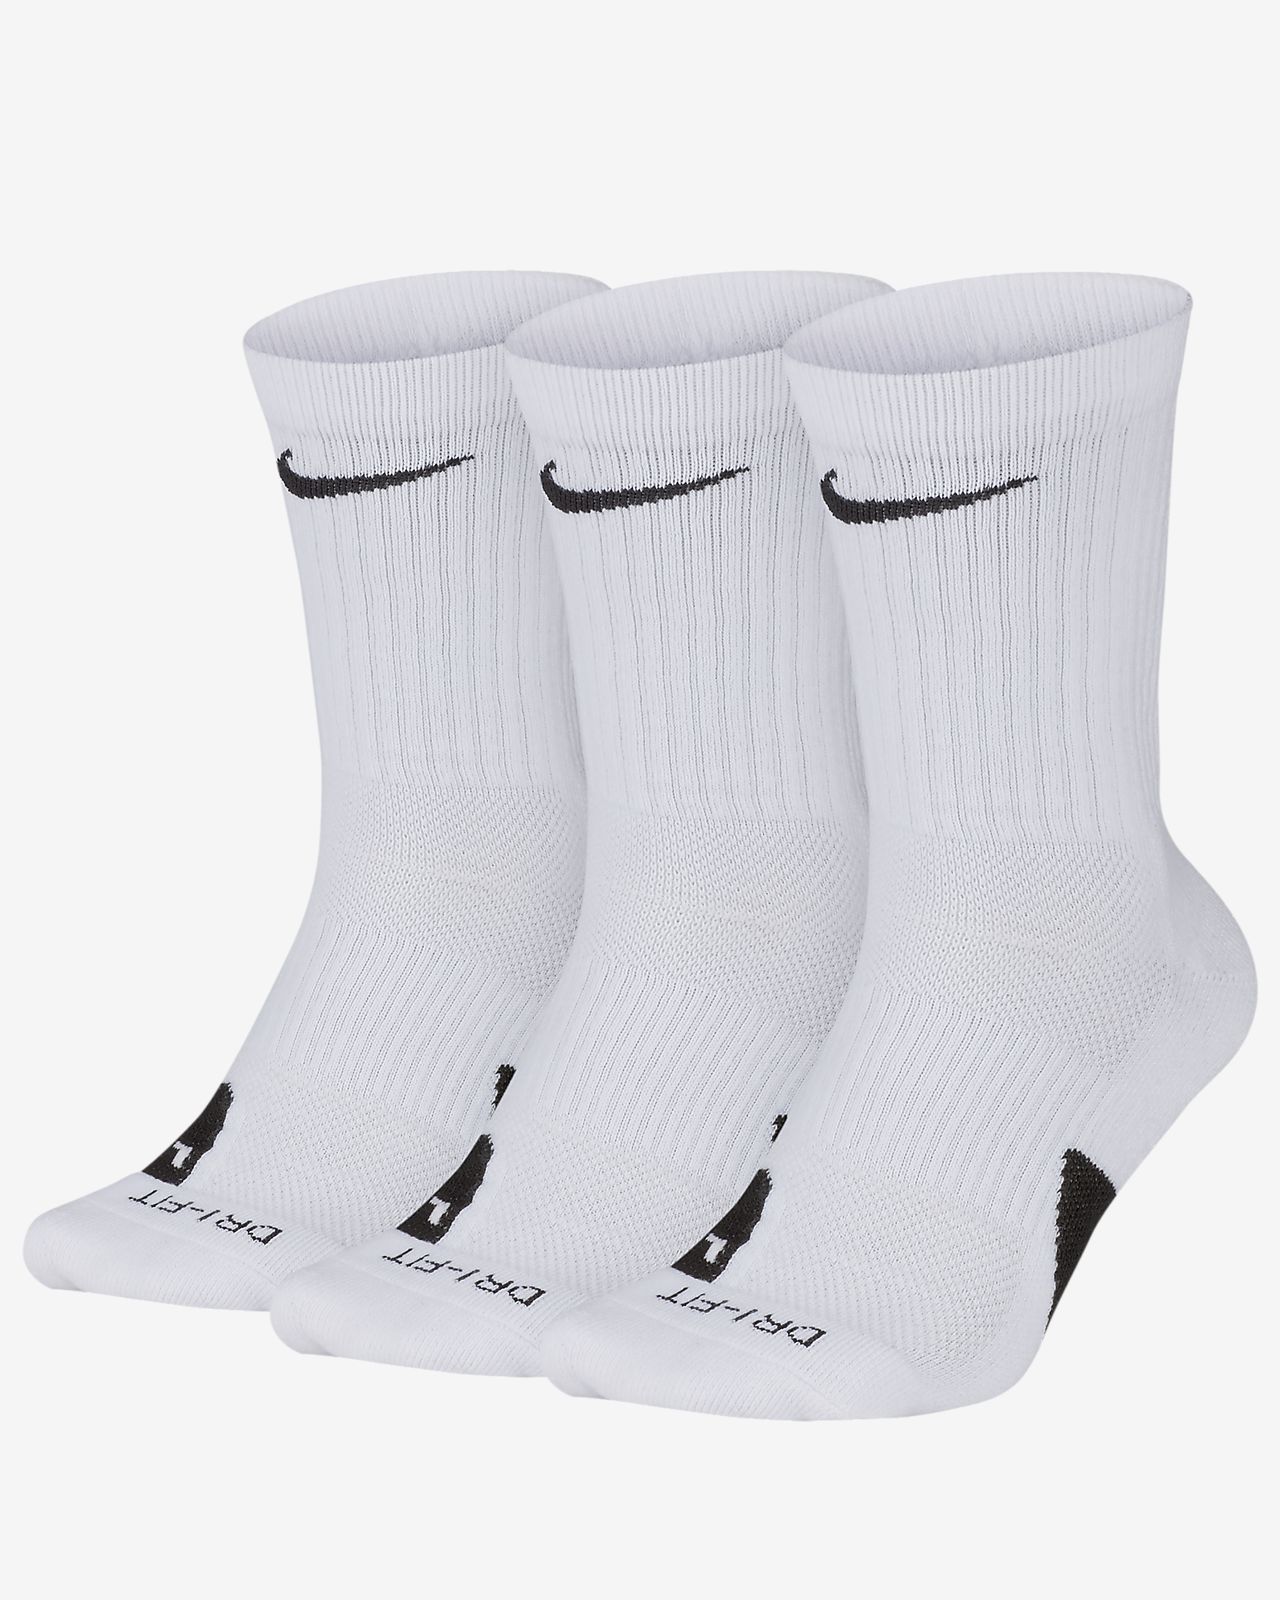 elite socks nike store